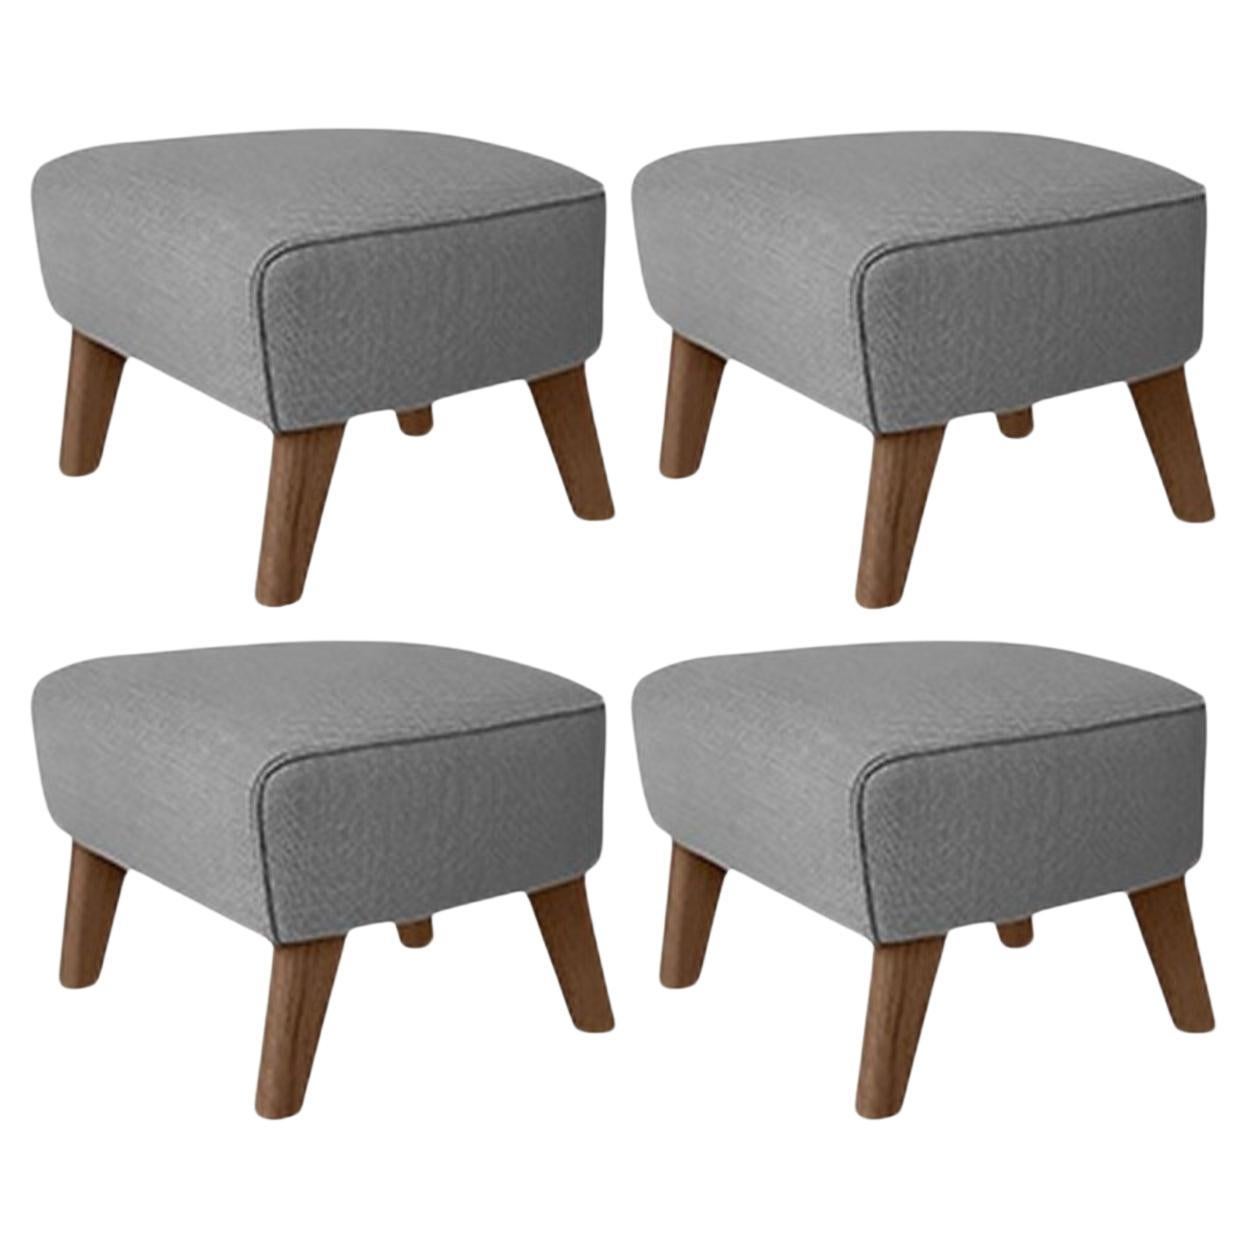 Set of 4 Grey and Smoked Oak Raf Simons Vidar 3 My Own Chair Footstool by Lassen